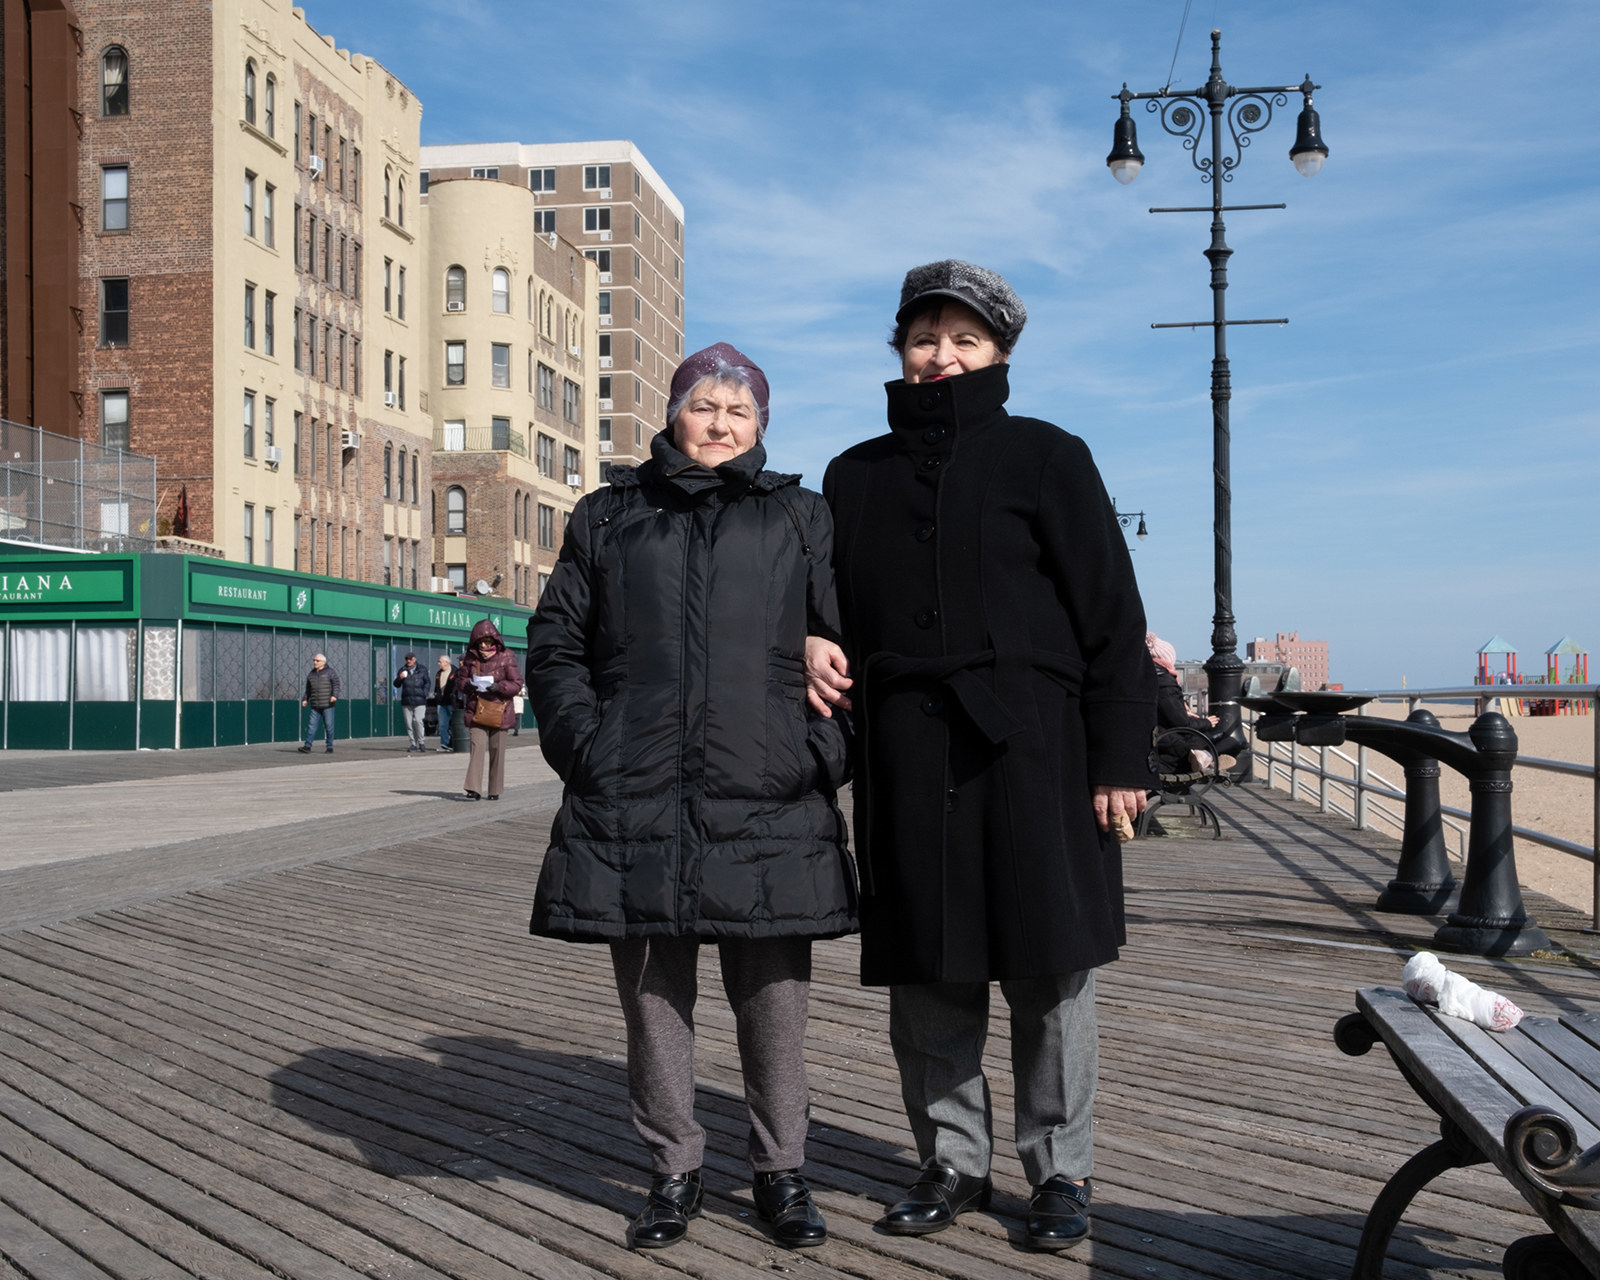 Two older women stand on the boardwalk